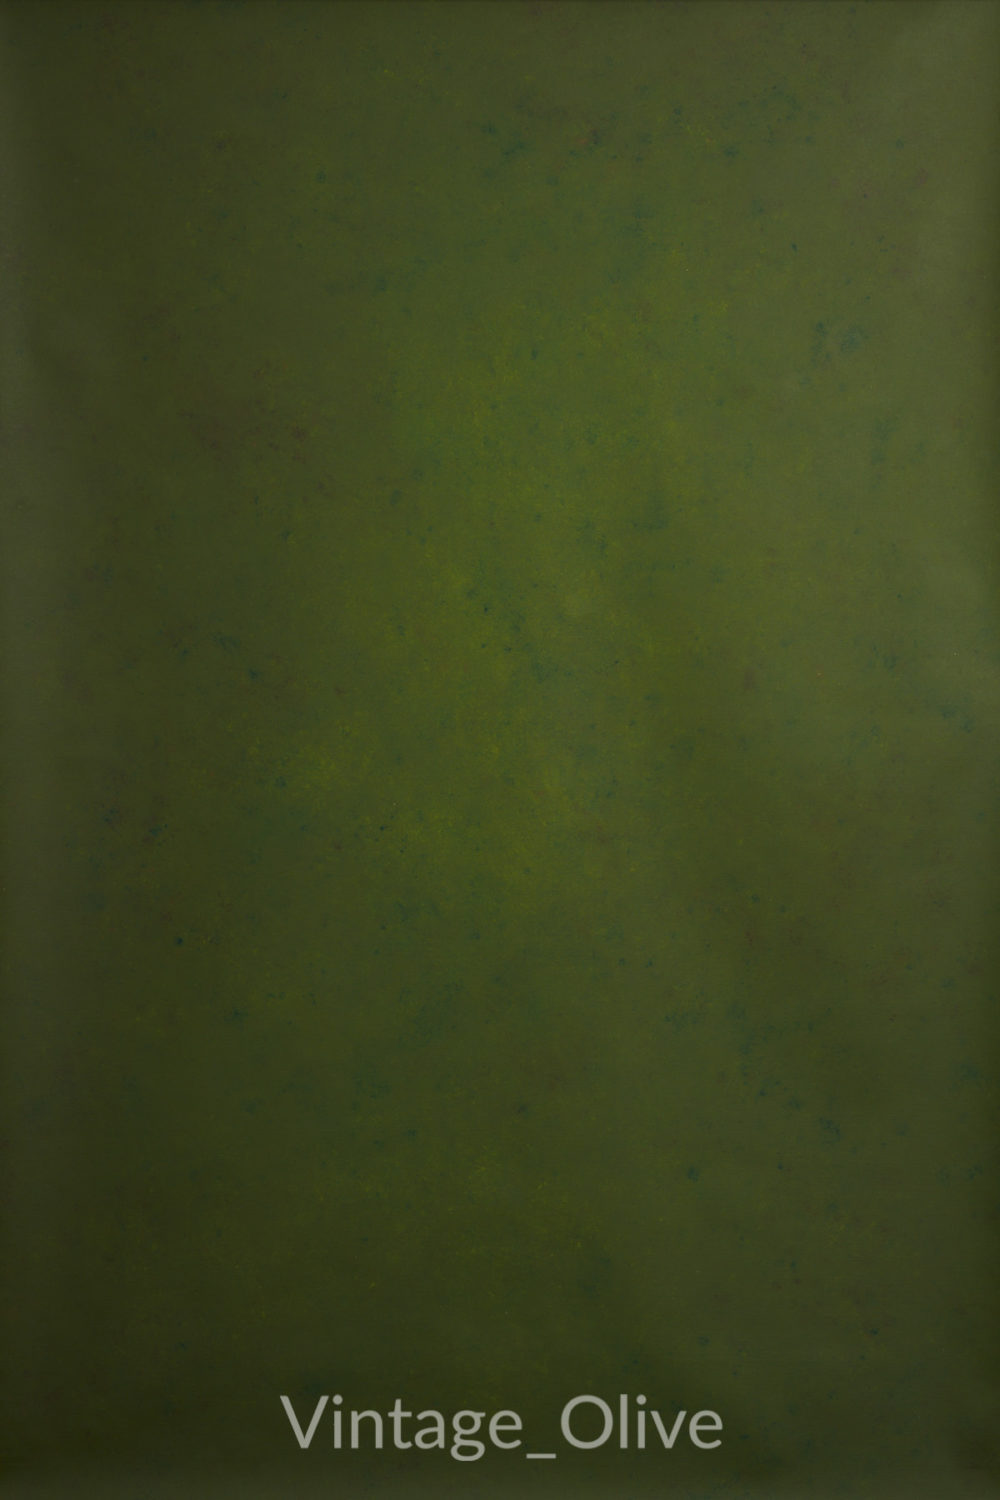 Hintergrundoption handbemalte Leinwand - grün